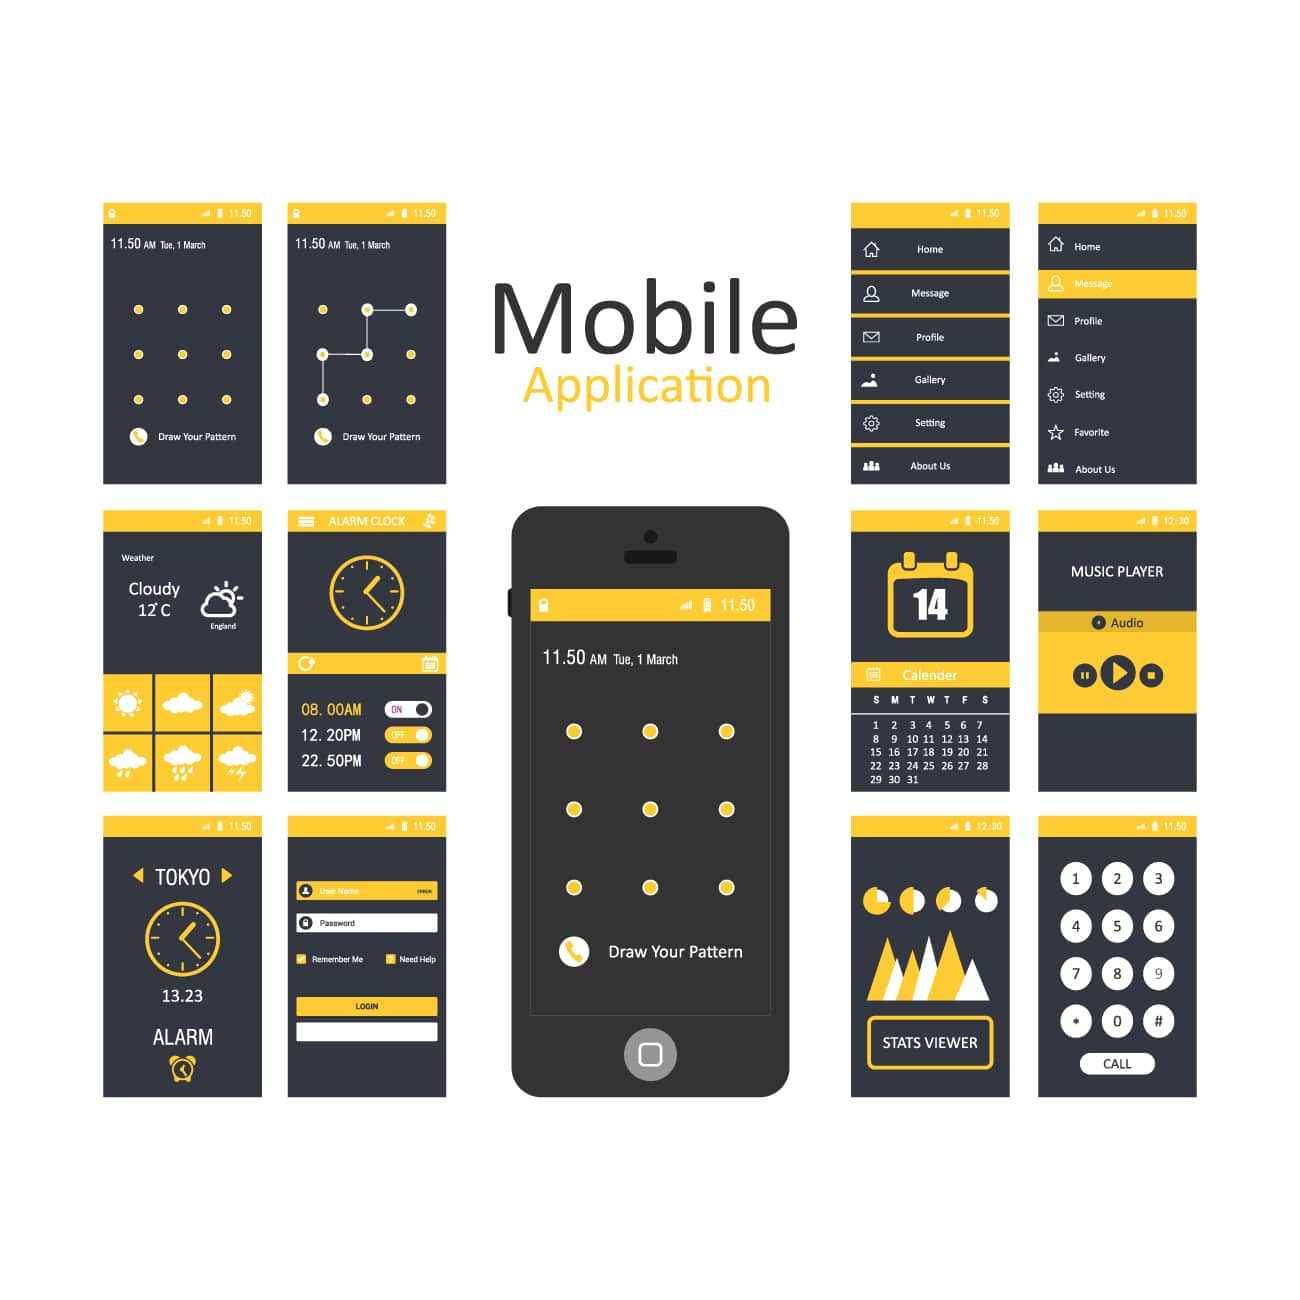 mobile application presentation template free